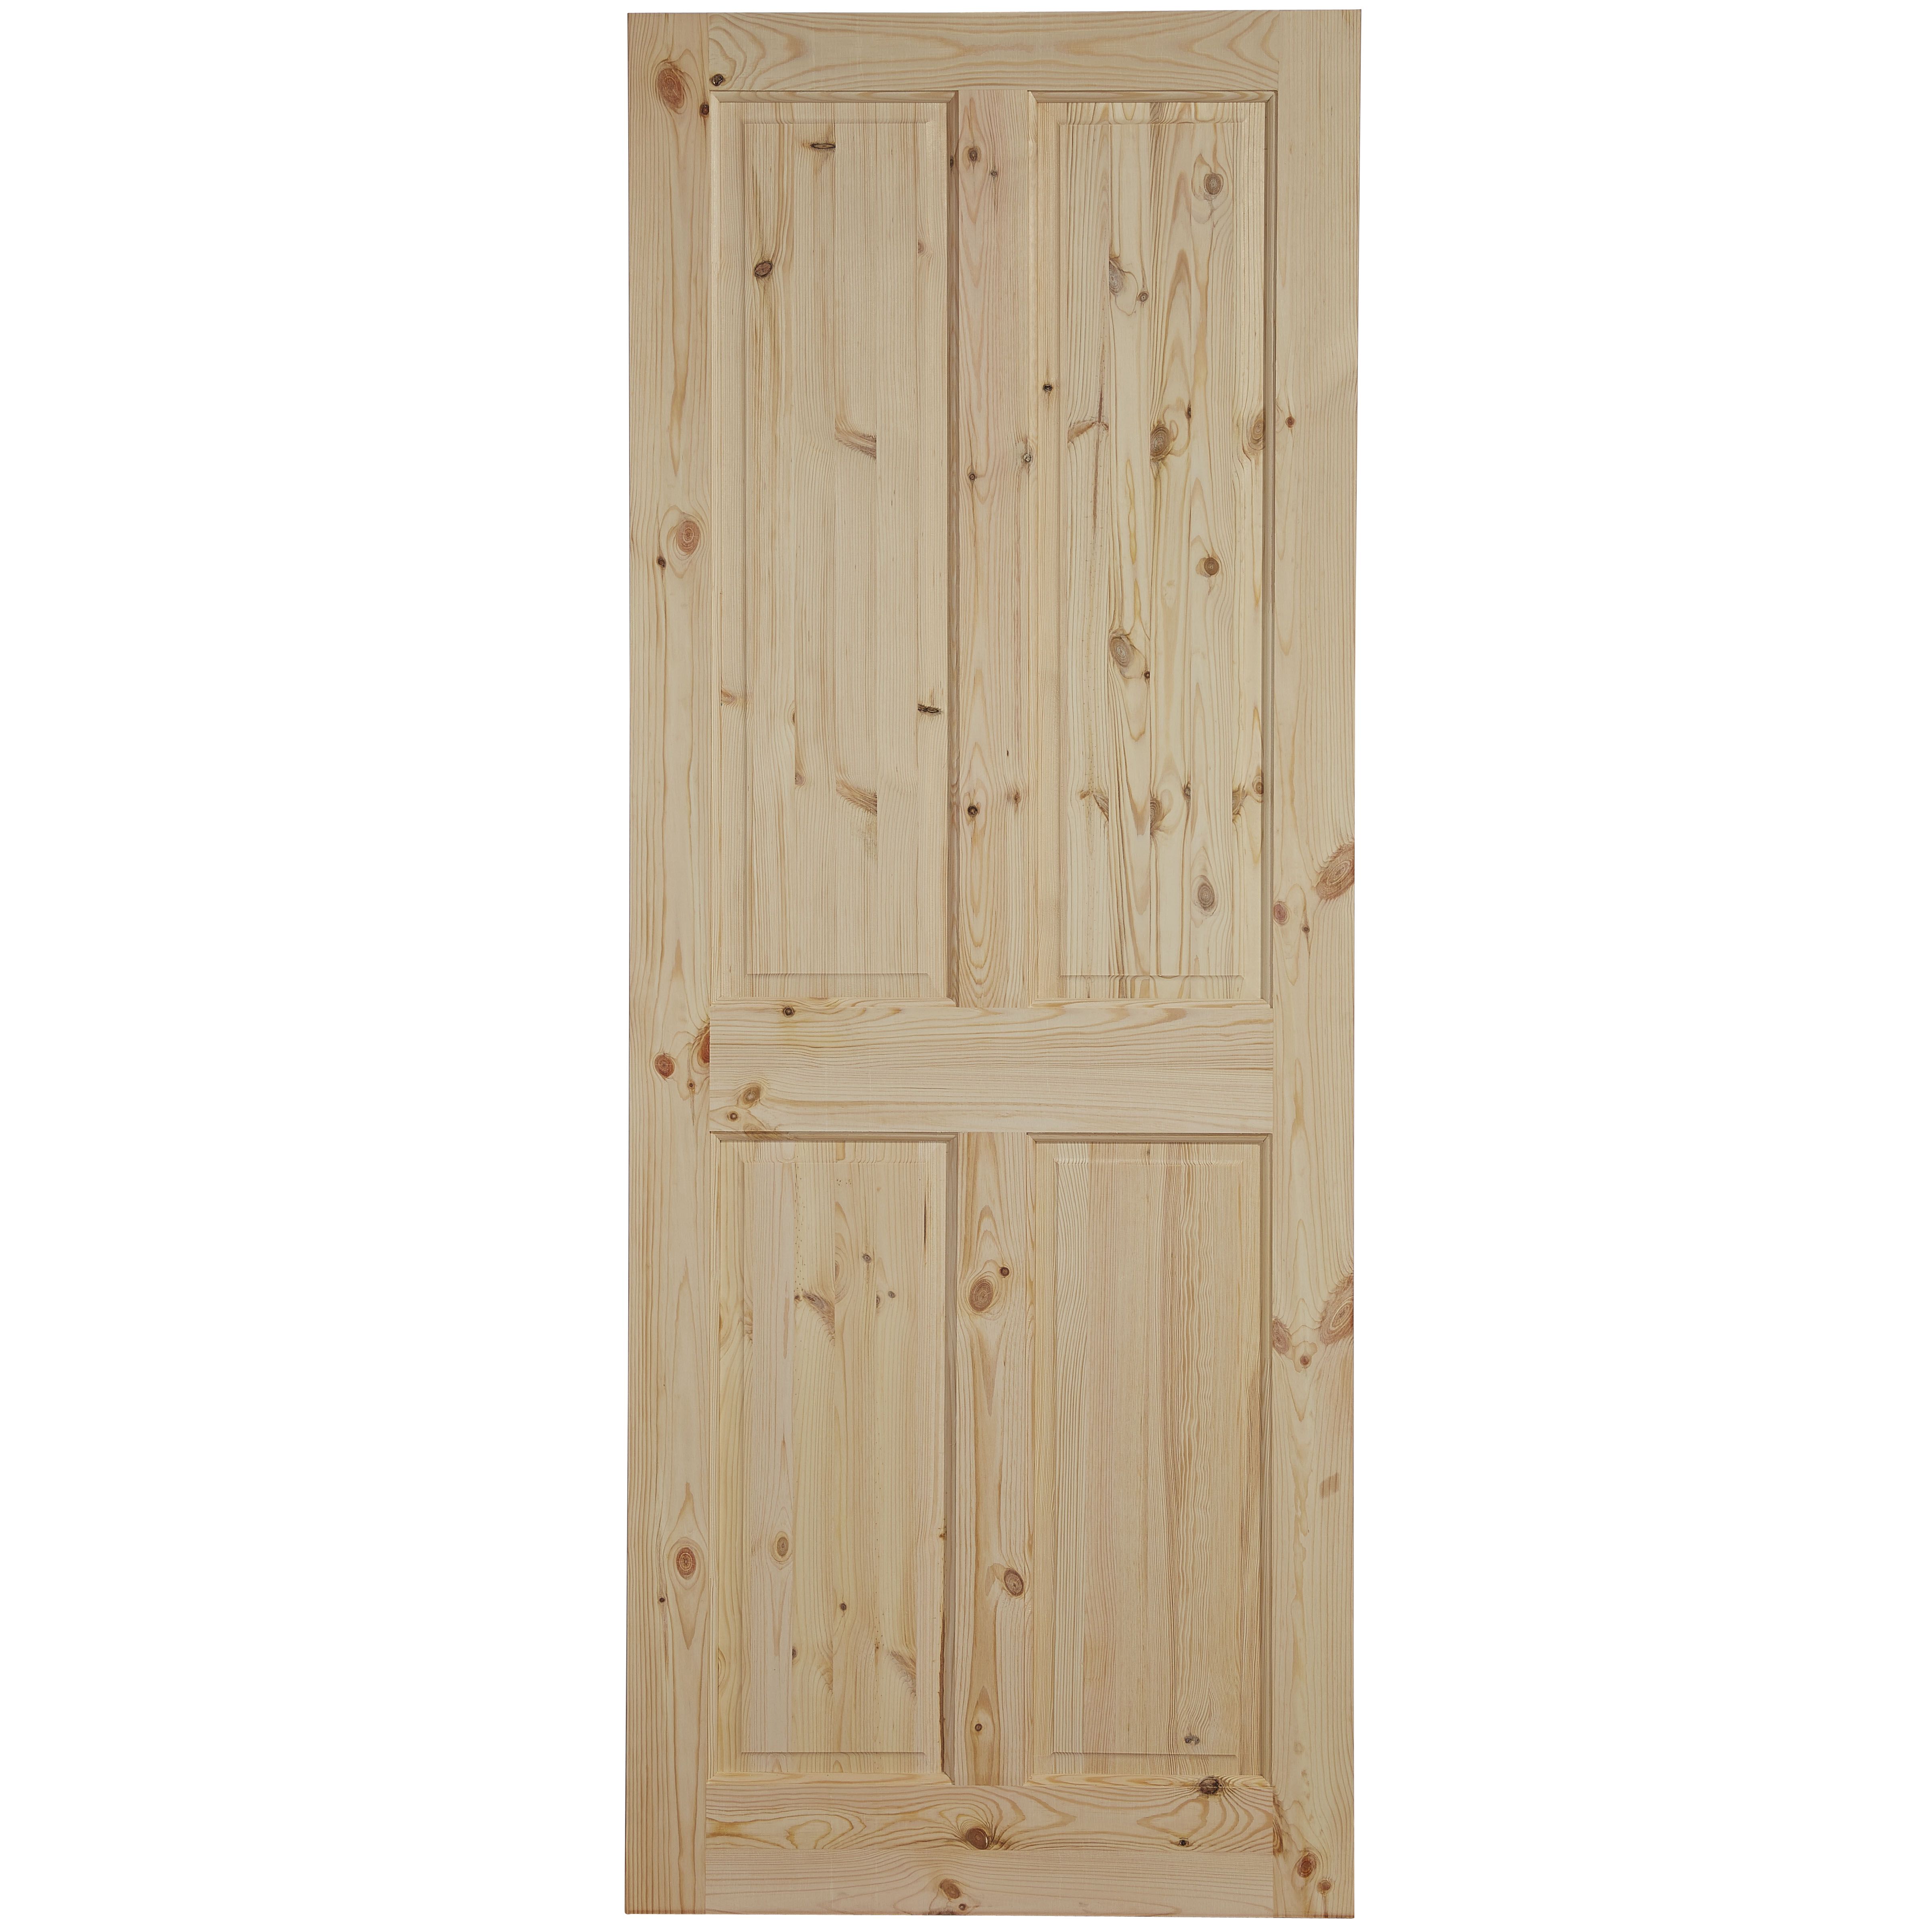 4 Panel Knotty Pine Lh Rh Internal Door H 1981mm W 762mm Departments Diy At B Q